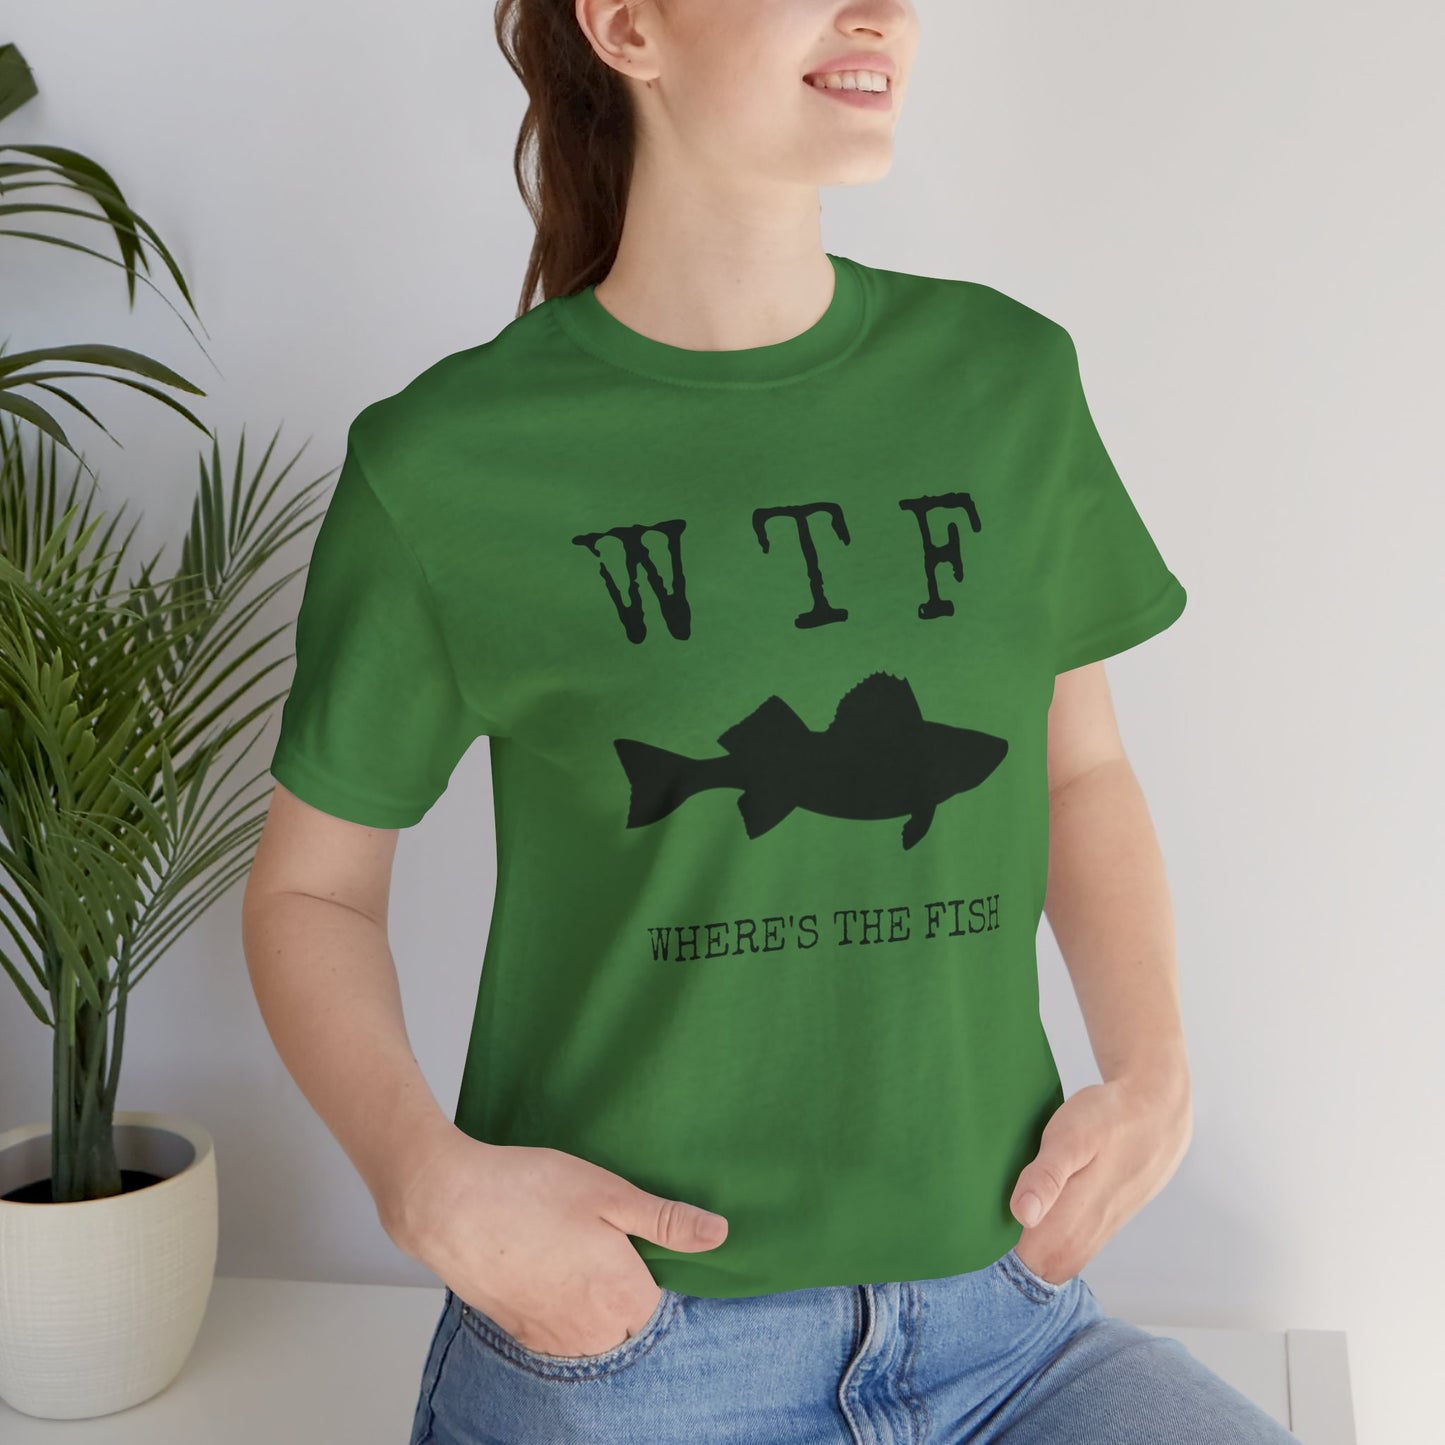 WTF Where Is The Fish Shirt, Fisherman Shirt, Fishing Shirts, Catfish Shirts, Fishing T-Shirt, Funny WTF Where The Fish Fisherman Shirt